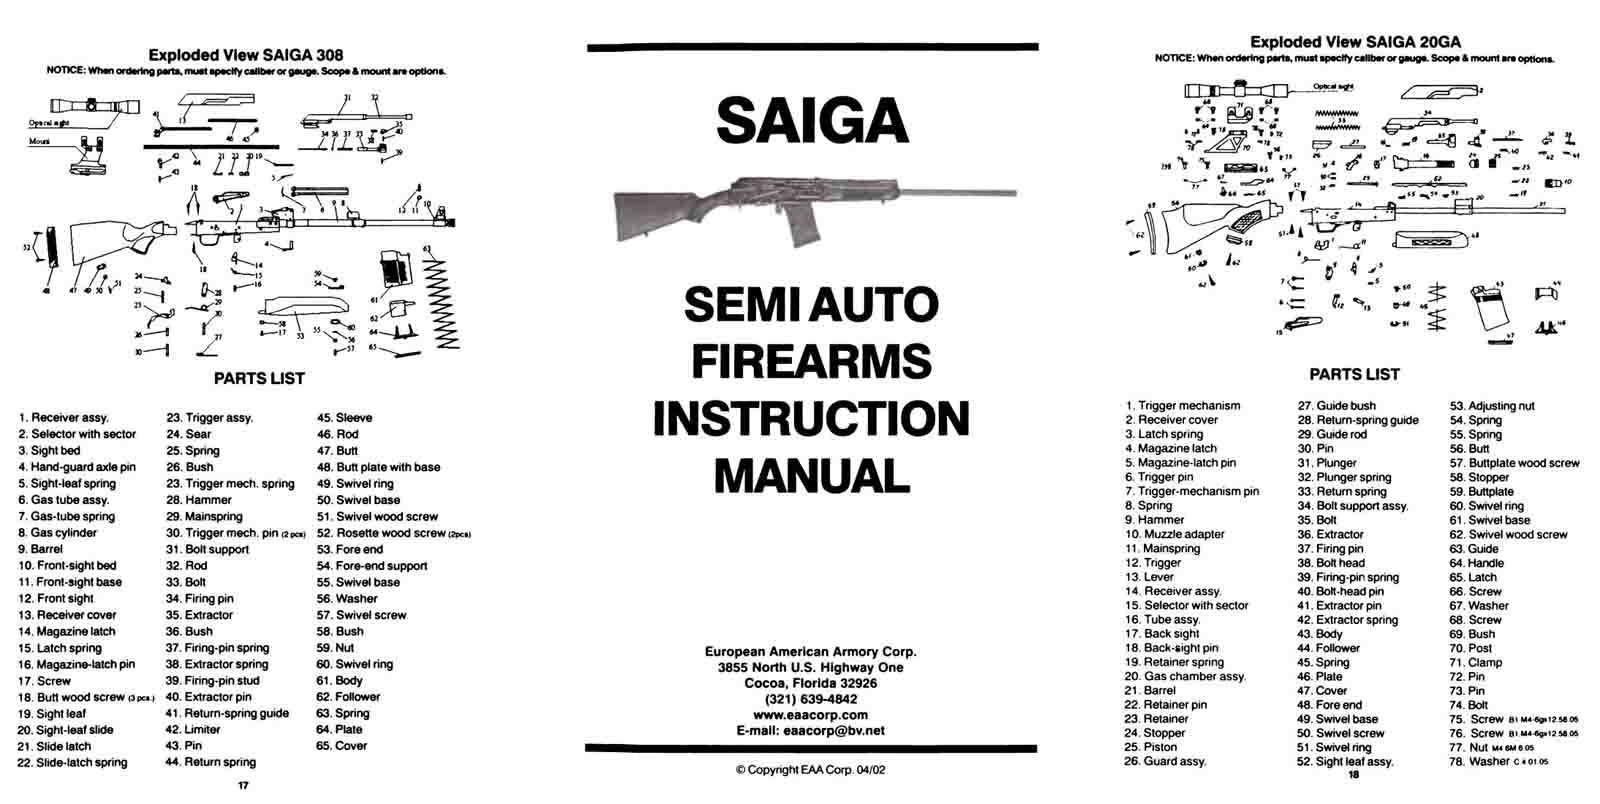 Saiga Semi-Automatic Firearms Manual, EAA Corp. - GB-img-0